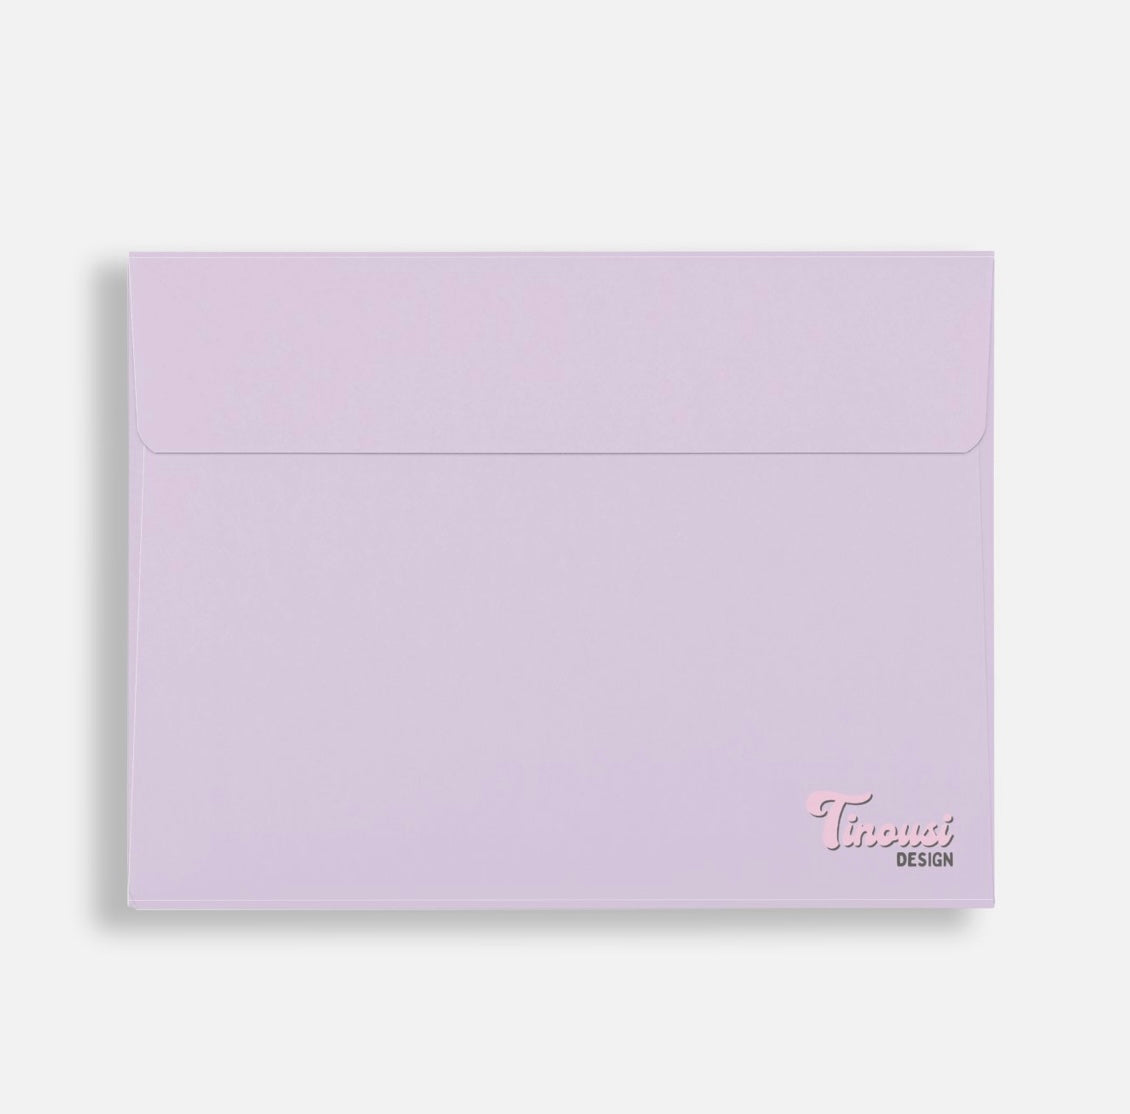 PREMIUM Pisupo Card and Matching Envelope